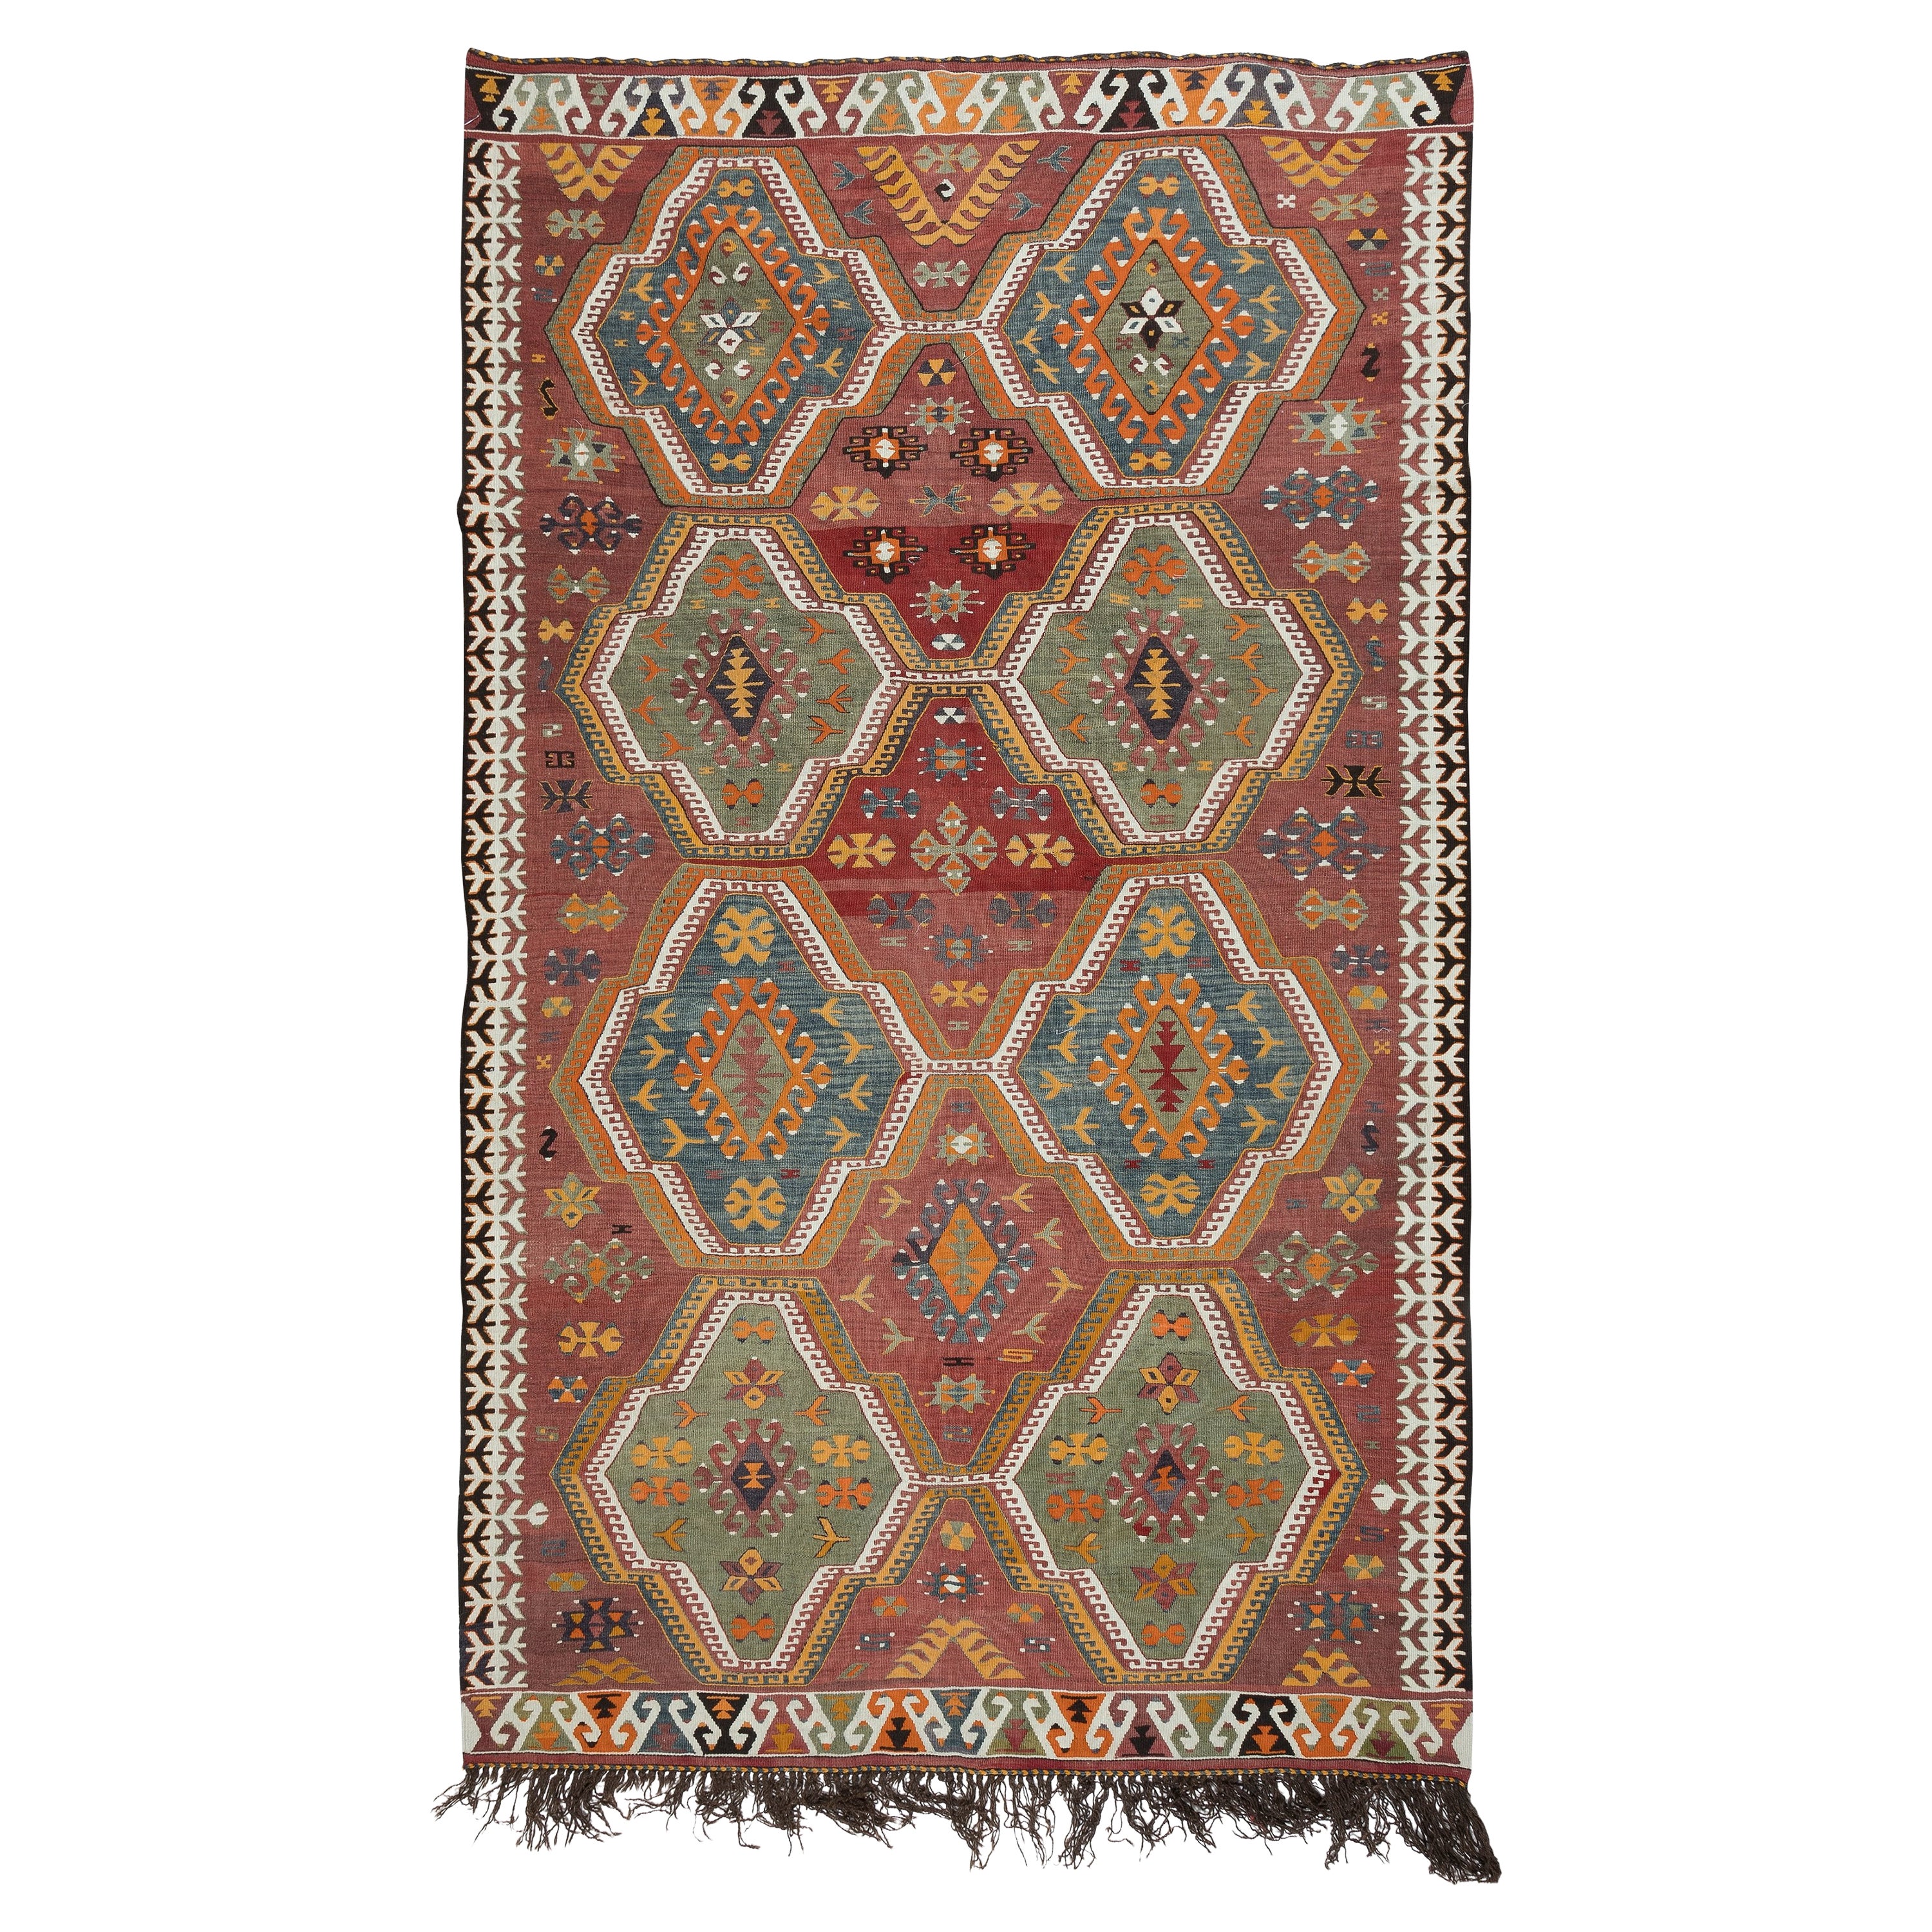 5.7x10 Ft Vintage Handwoven Turkish Kilim 'Flat Weave' with Geometric Patterns